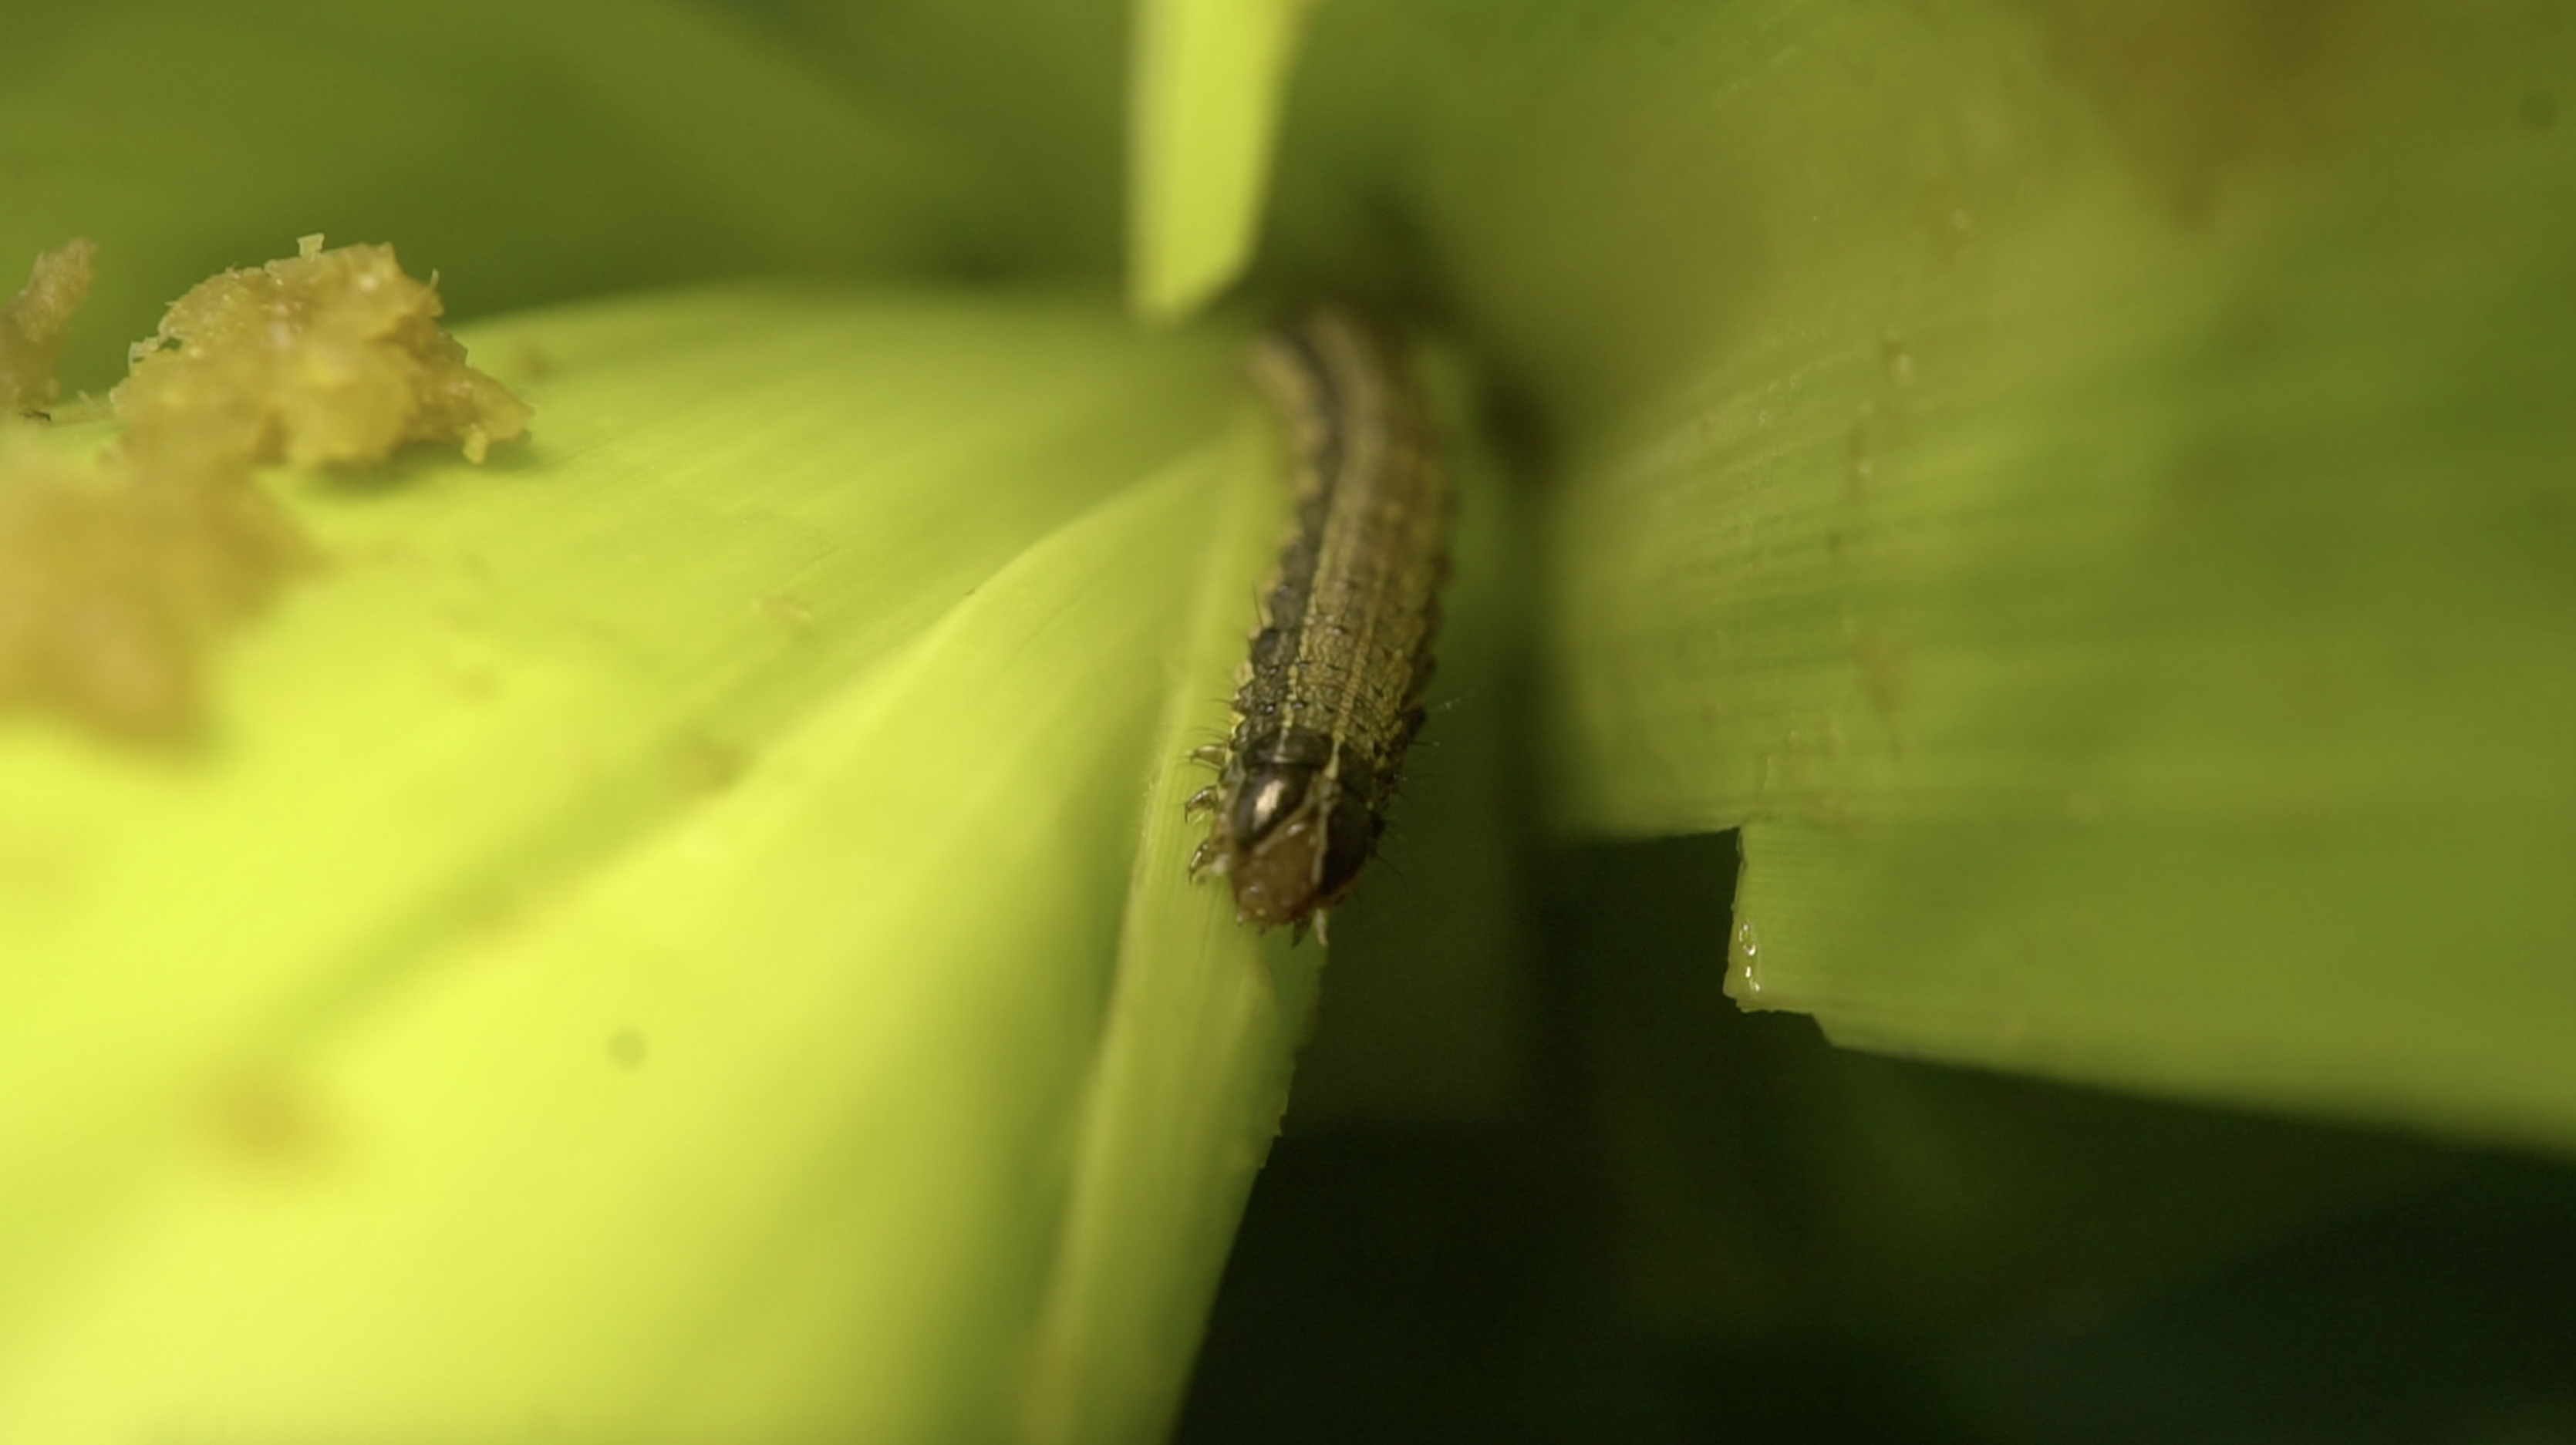 Fall armyworm burrowed in corn